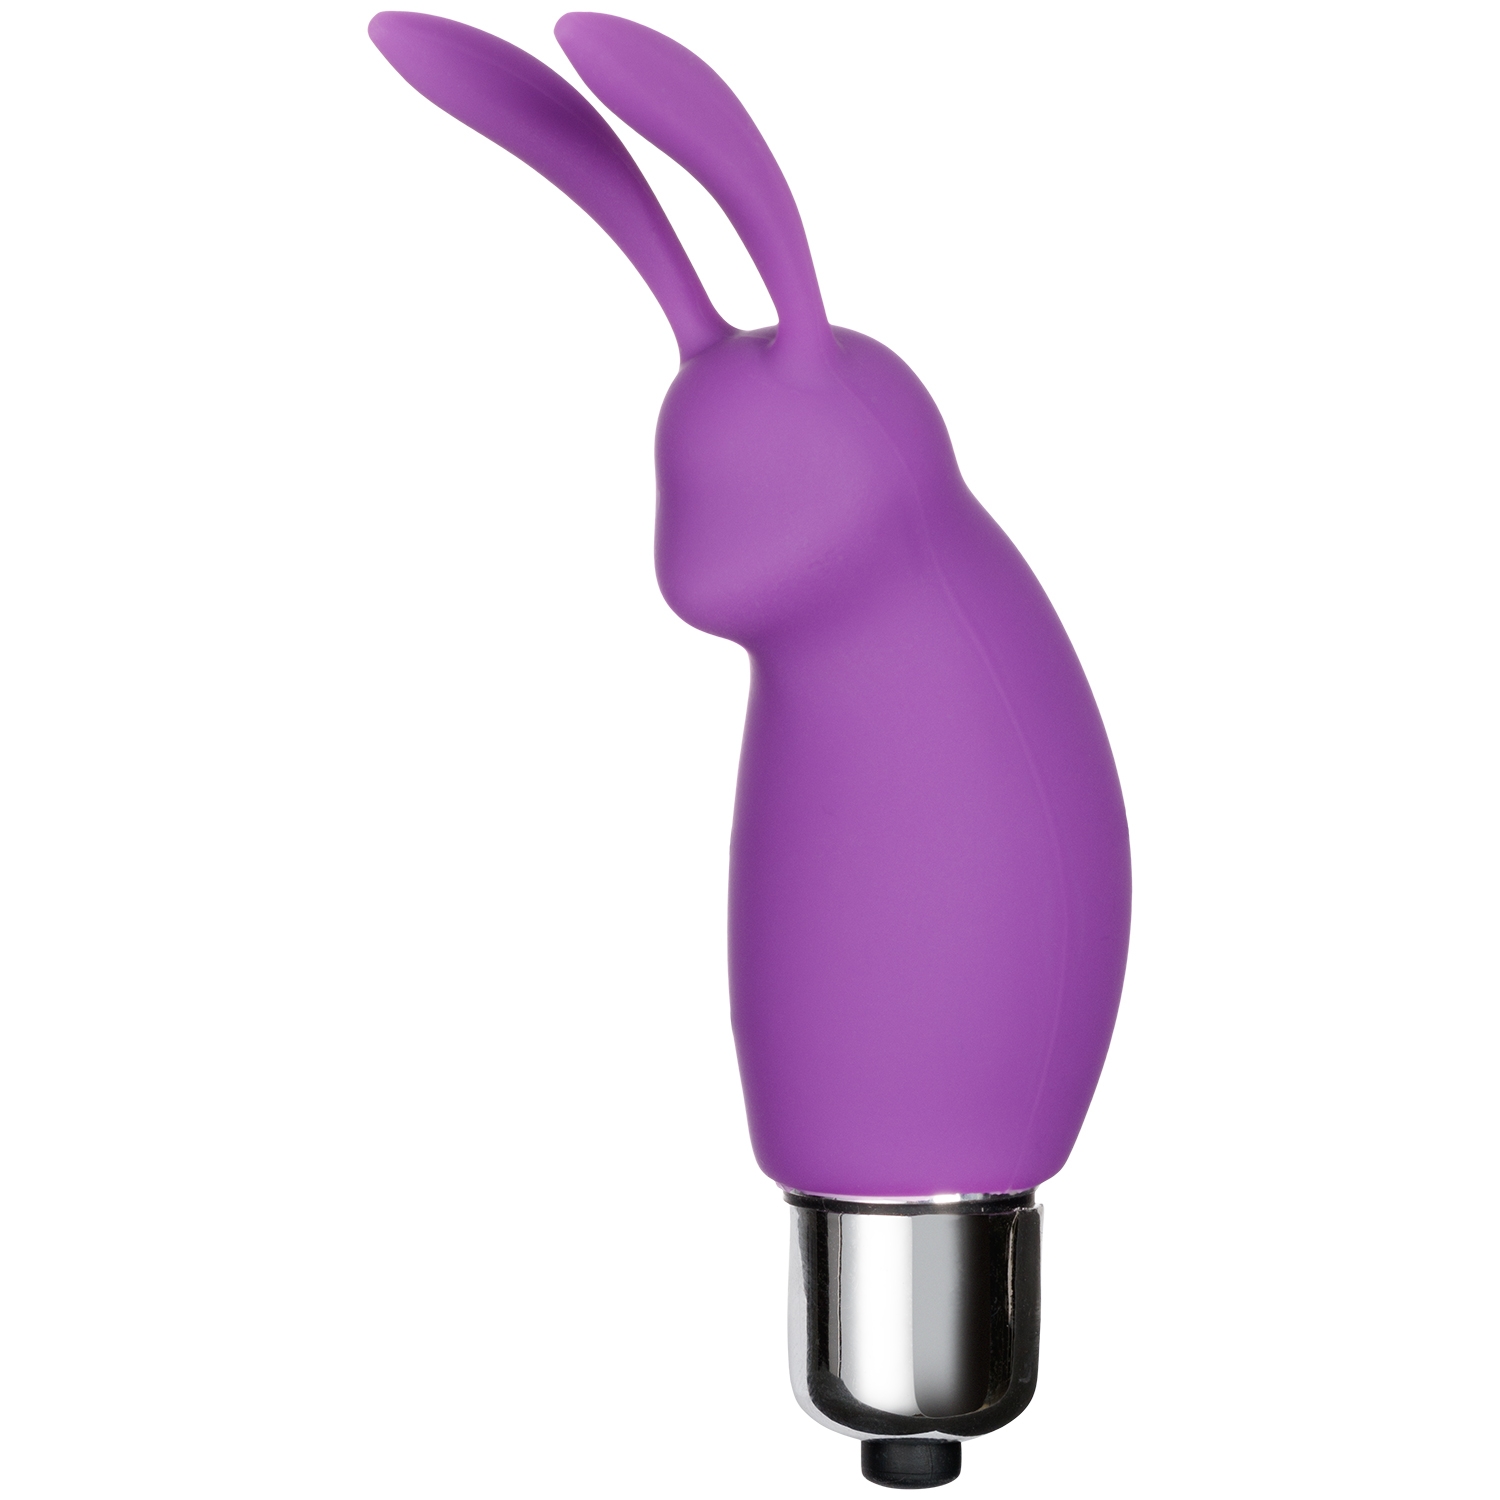 baseks Teasing Rabbit Vibrator - Purple